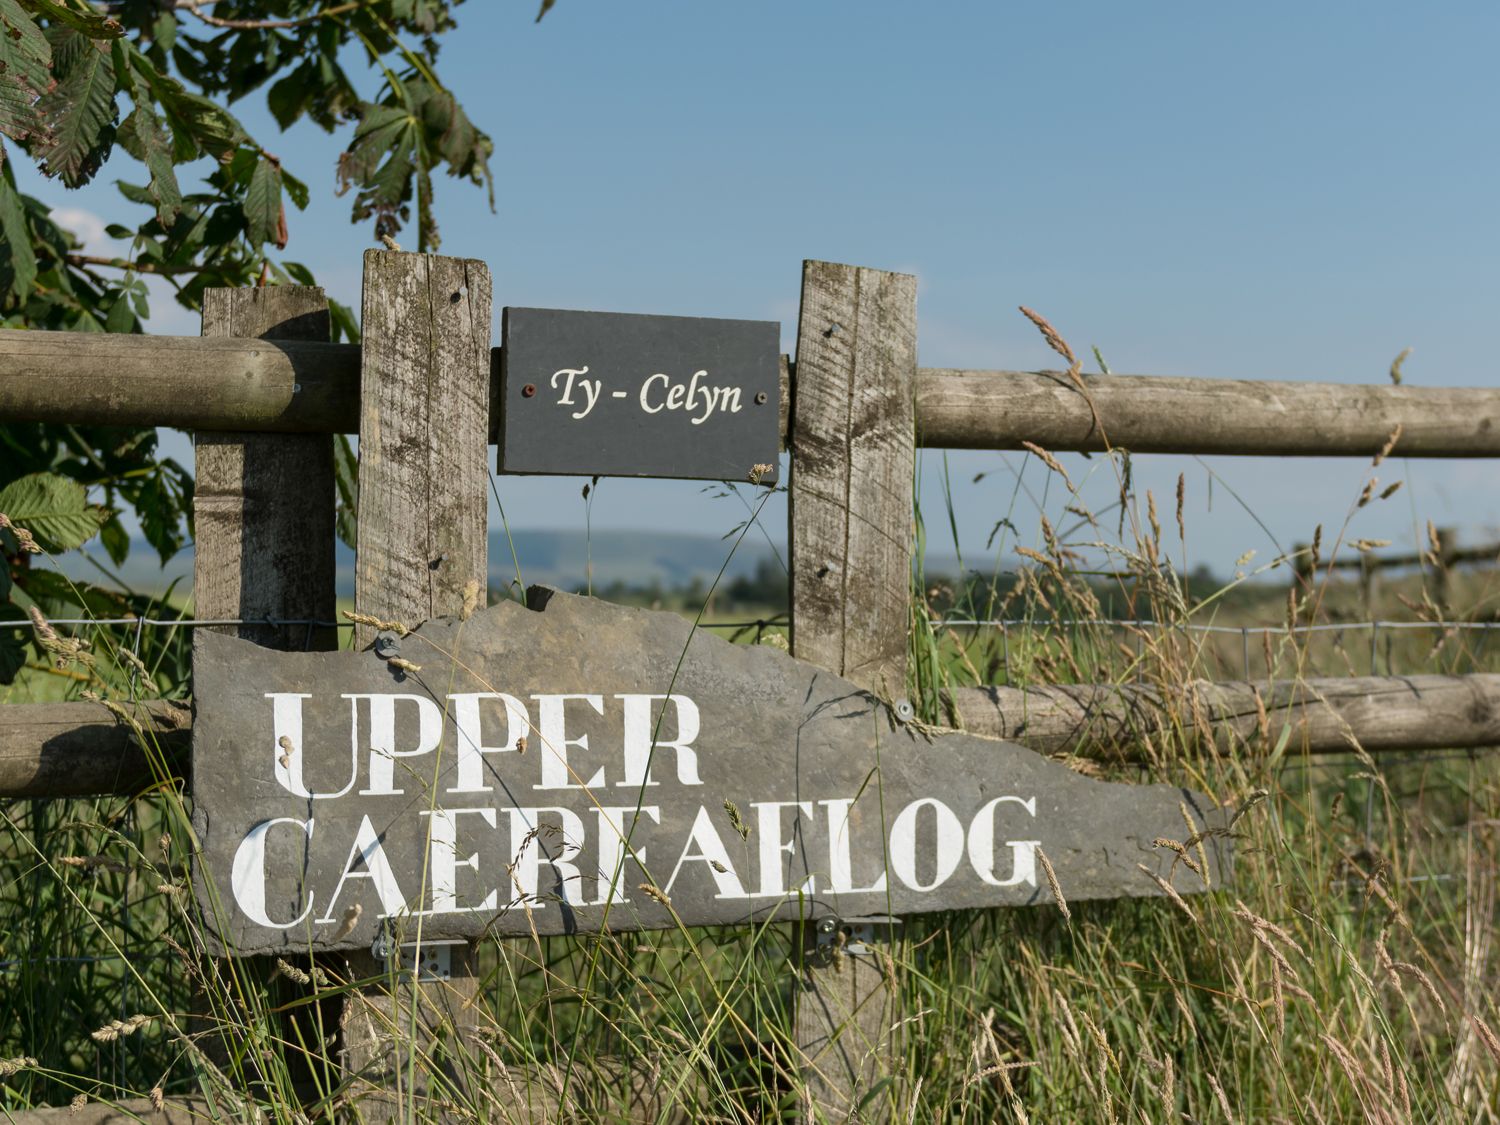 Upper Caerfaelog, Wales